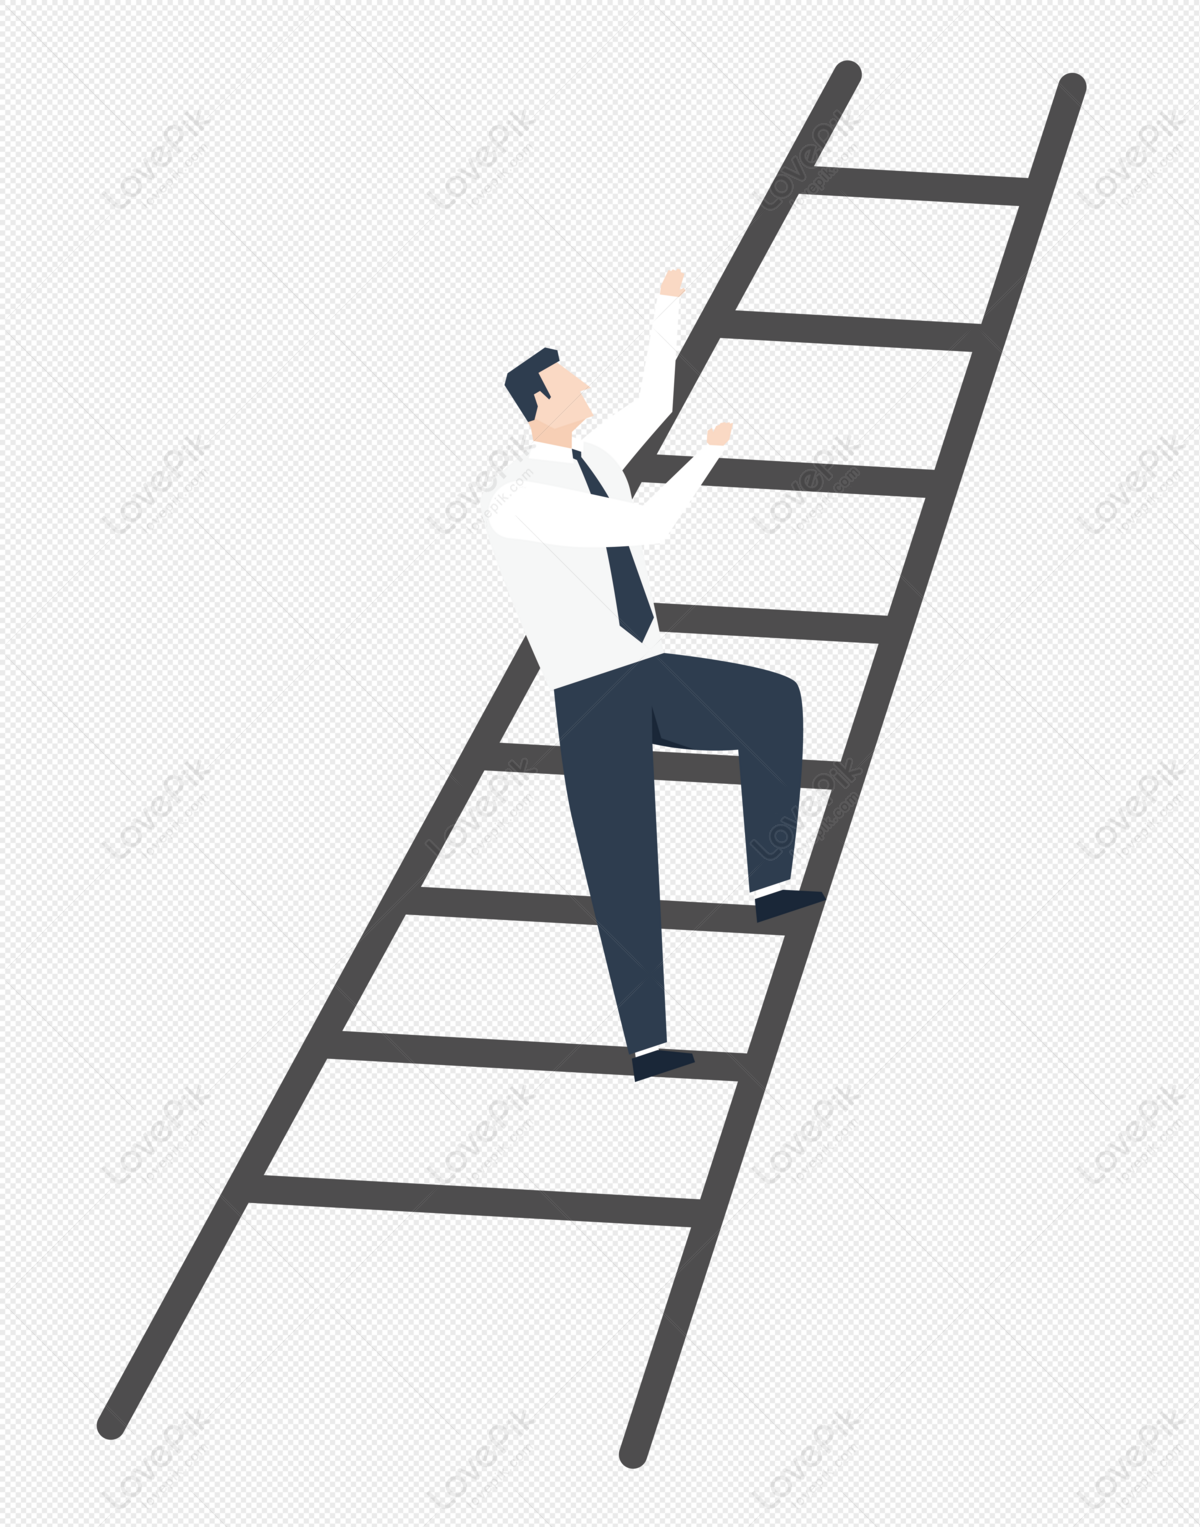 man climbing stairs clipart